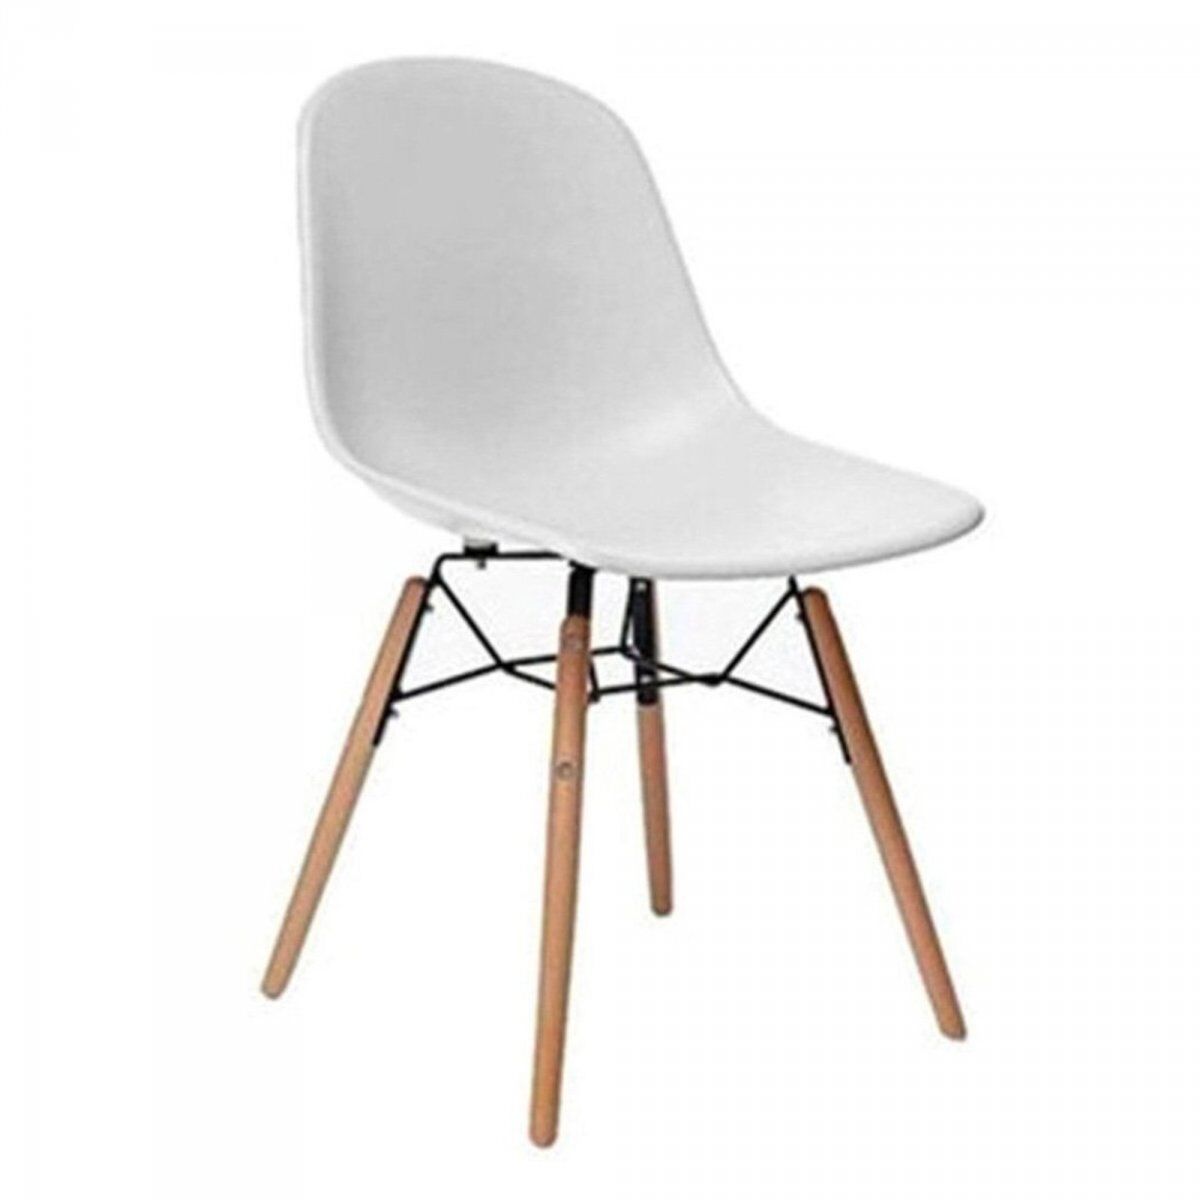 Meubles & Design Chaise salle à manger design scandinave blanc